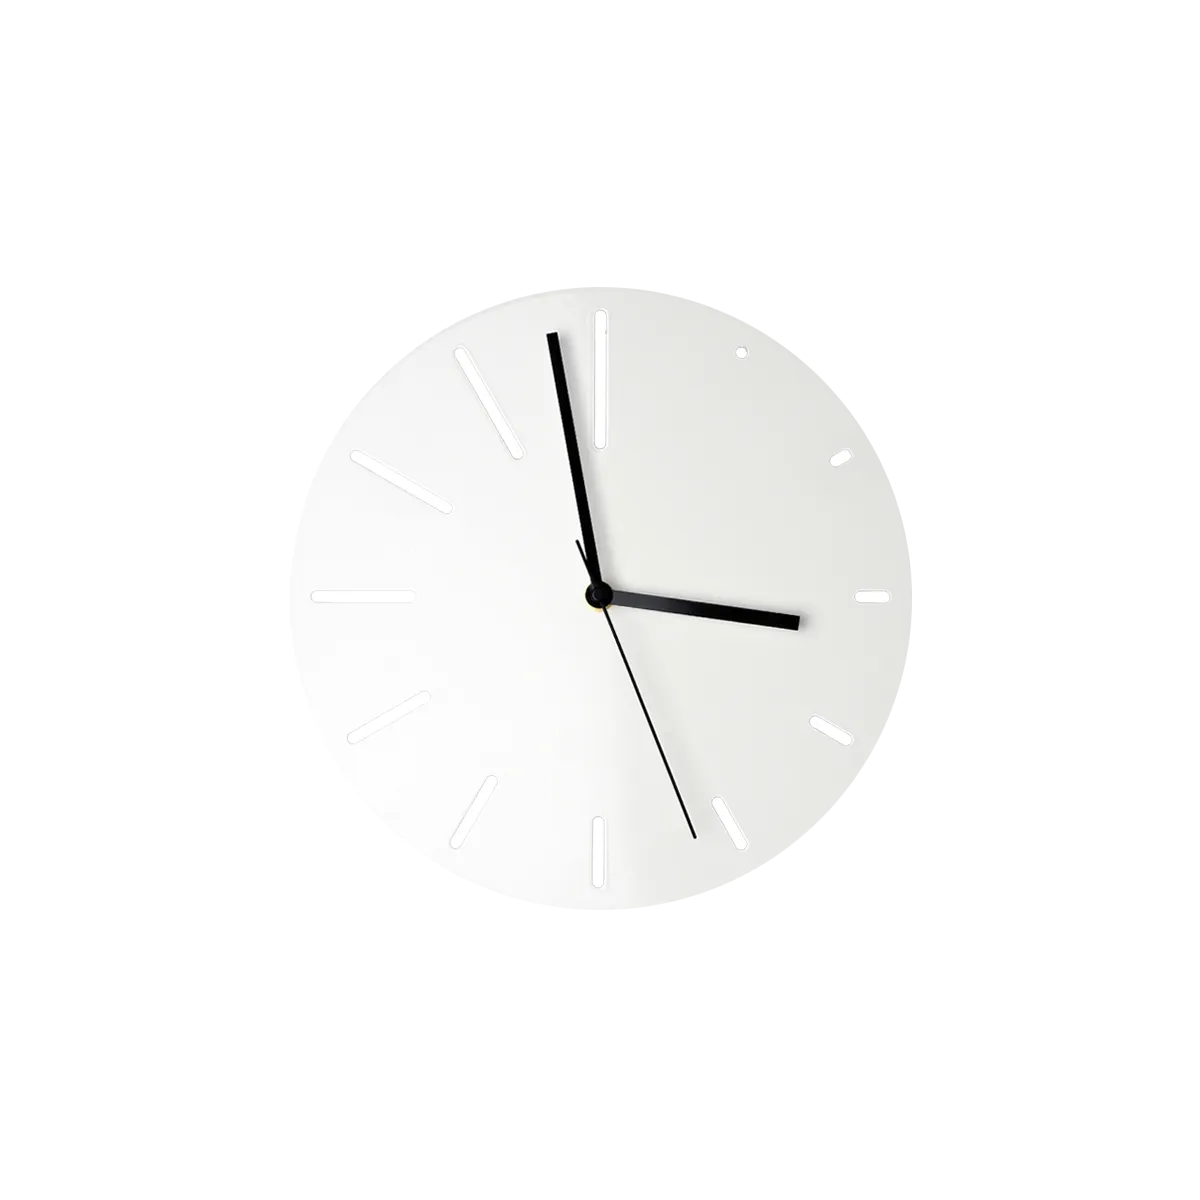 Wall Clock “Poggenklas” – white